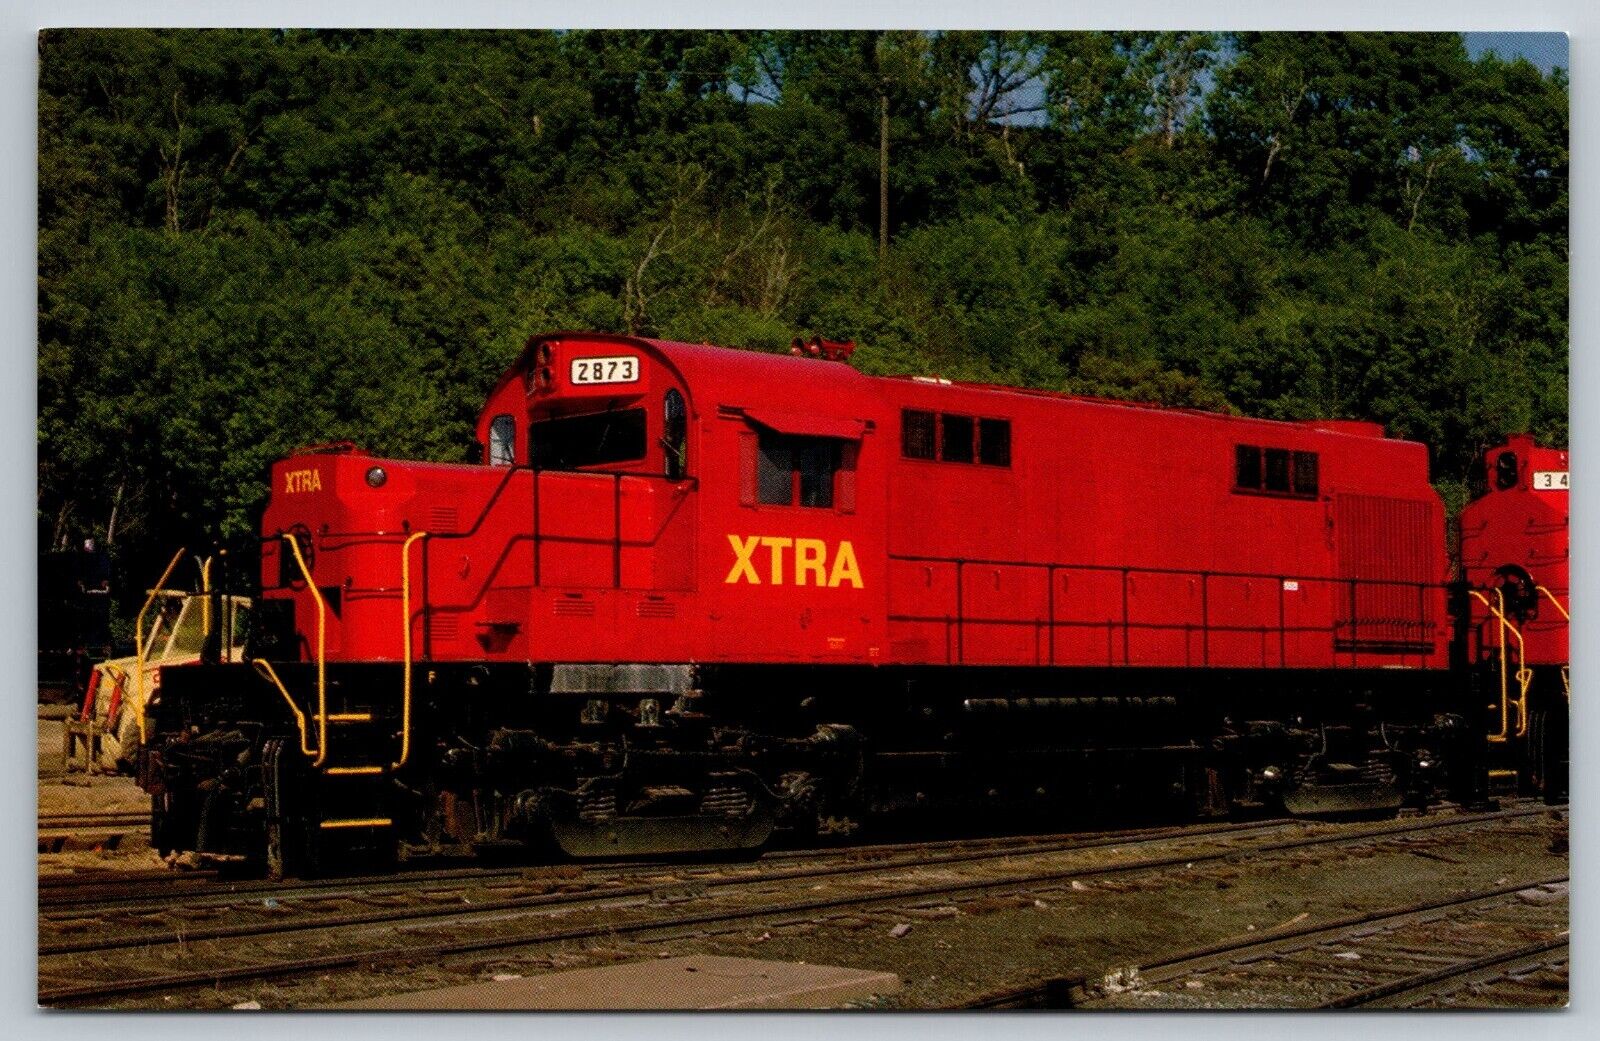 St Paul Minnesota Red Alco RS36 Xtra 2873 Train Postcard